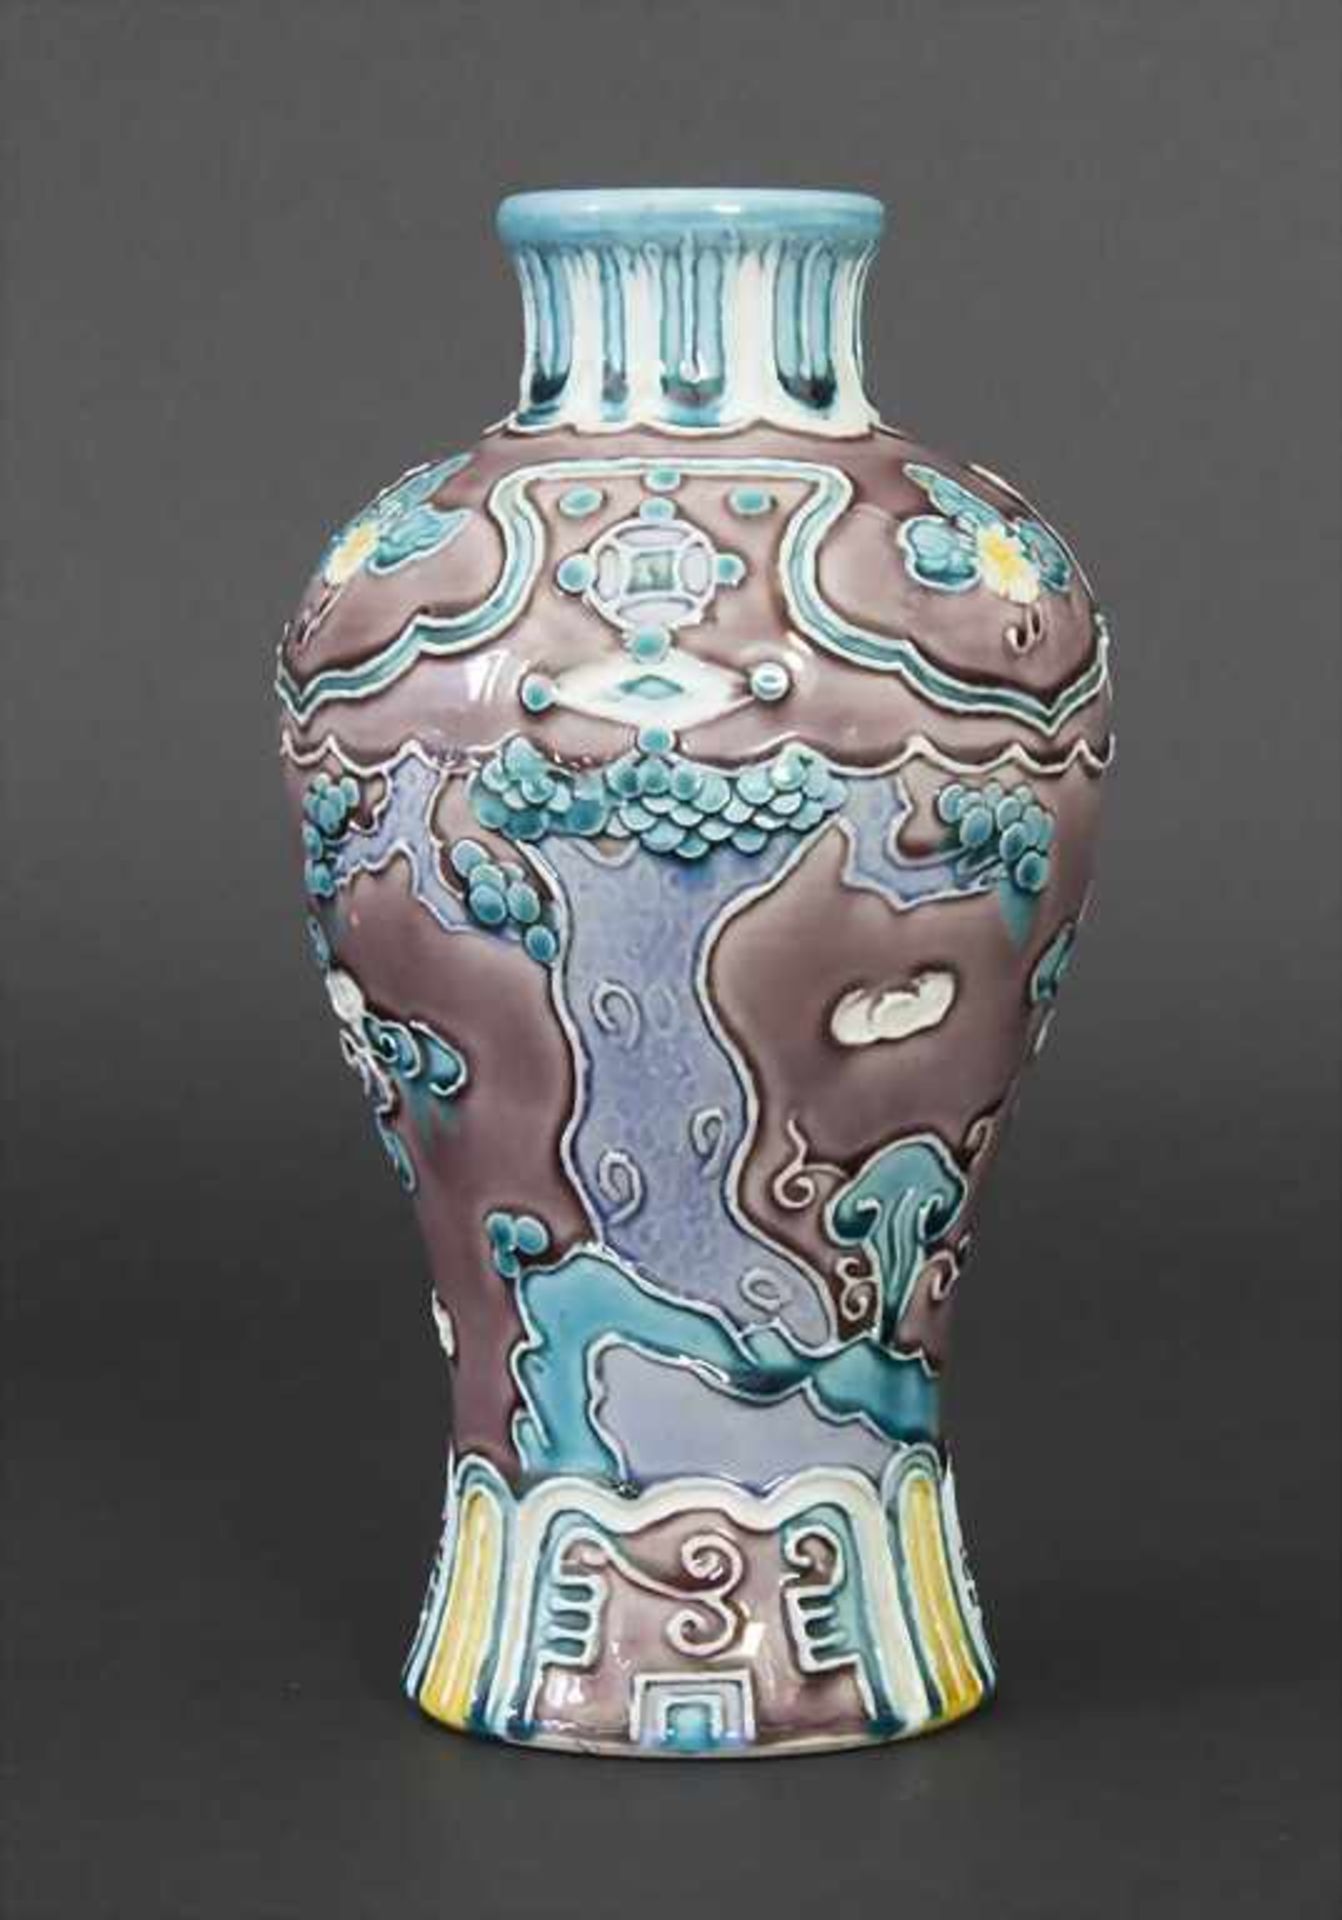 Fahua-Vase, China, wohl 18./19. Jh.Material: Bisquitporzellan, Auflagen in Fahuatechnik, polychrom